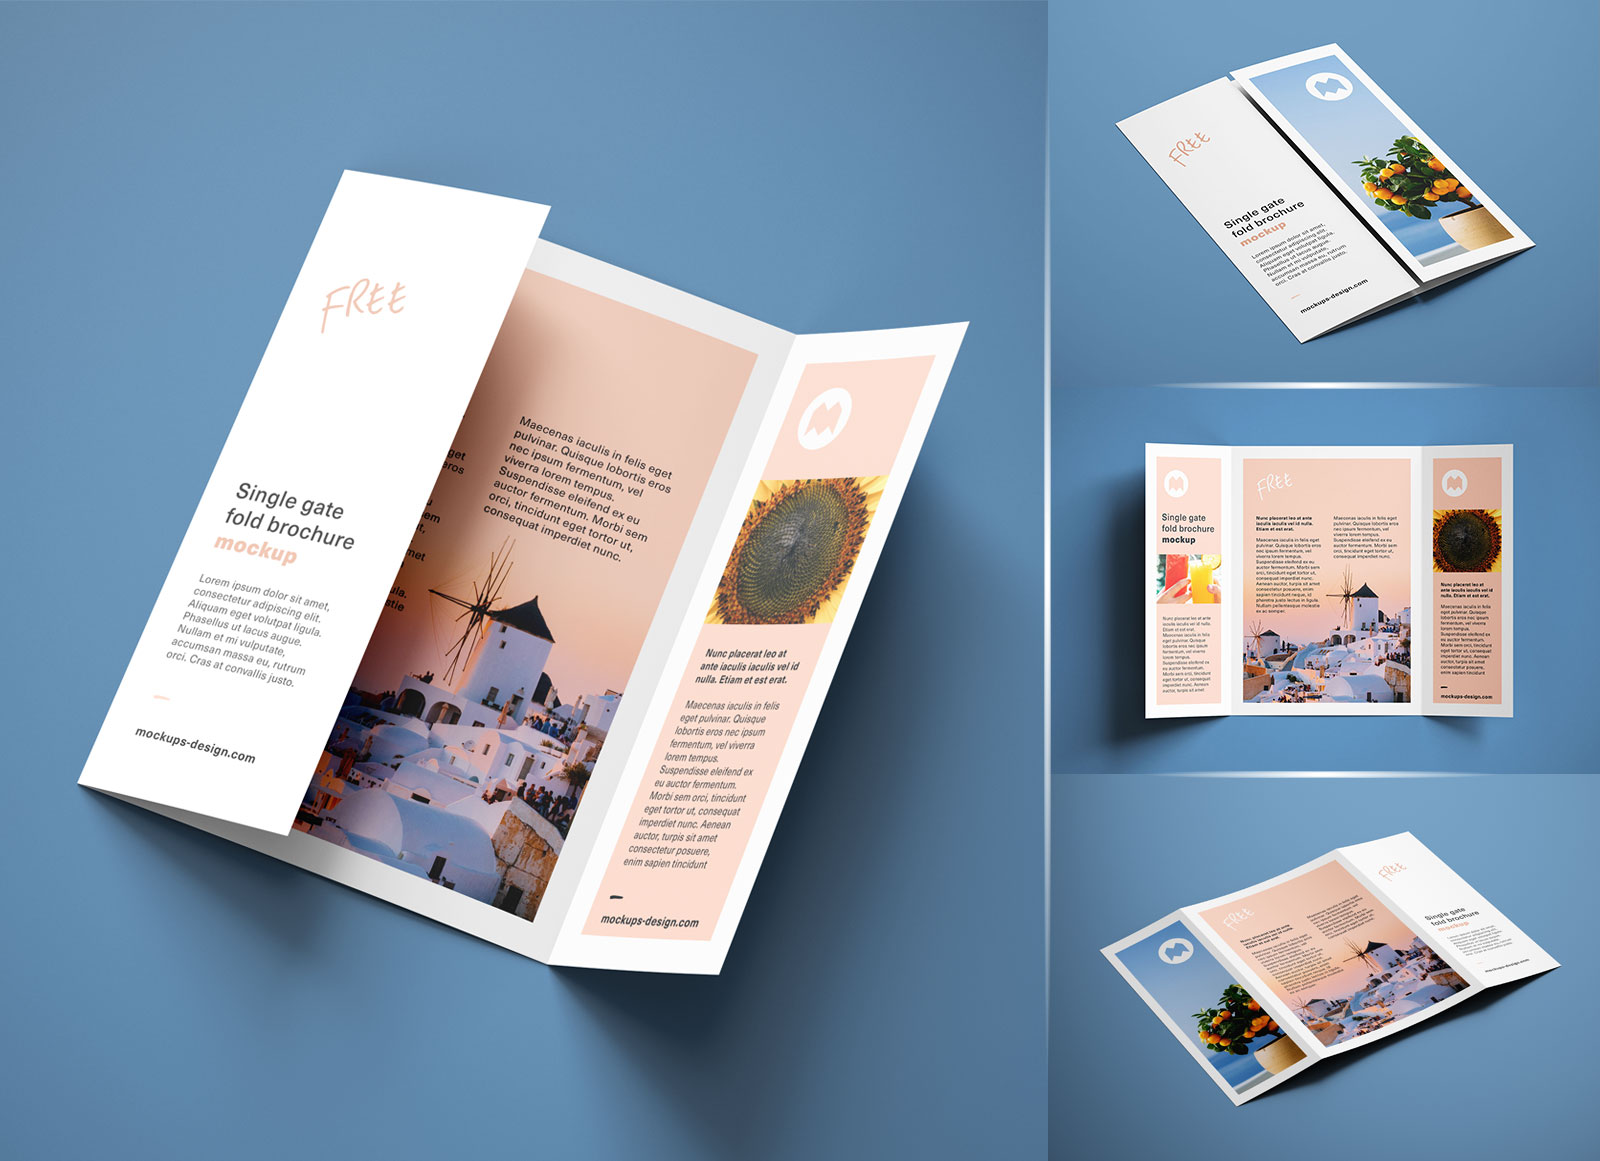 Free-Single-Gate-Fold-Brochure-Mockup-PSD-Set